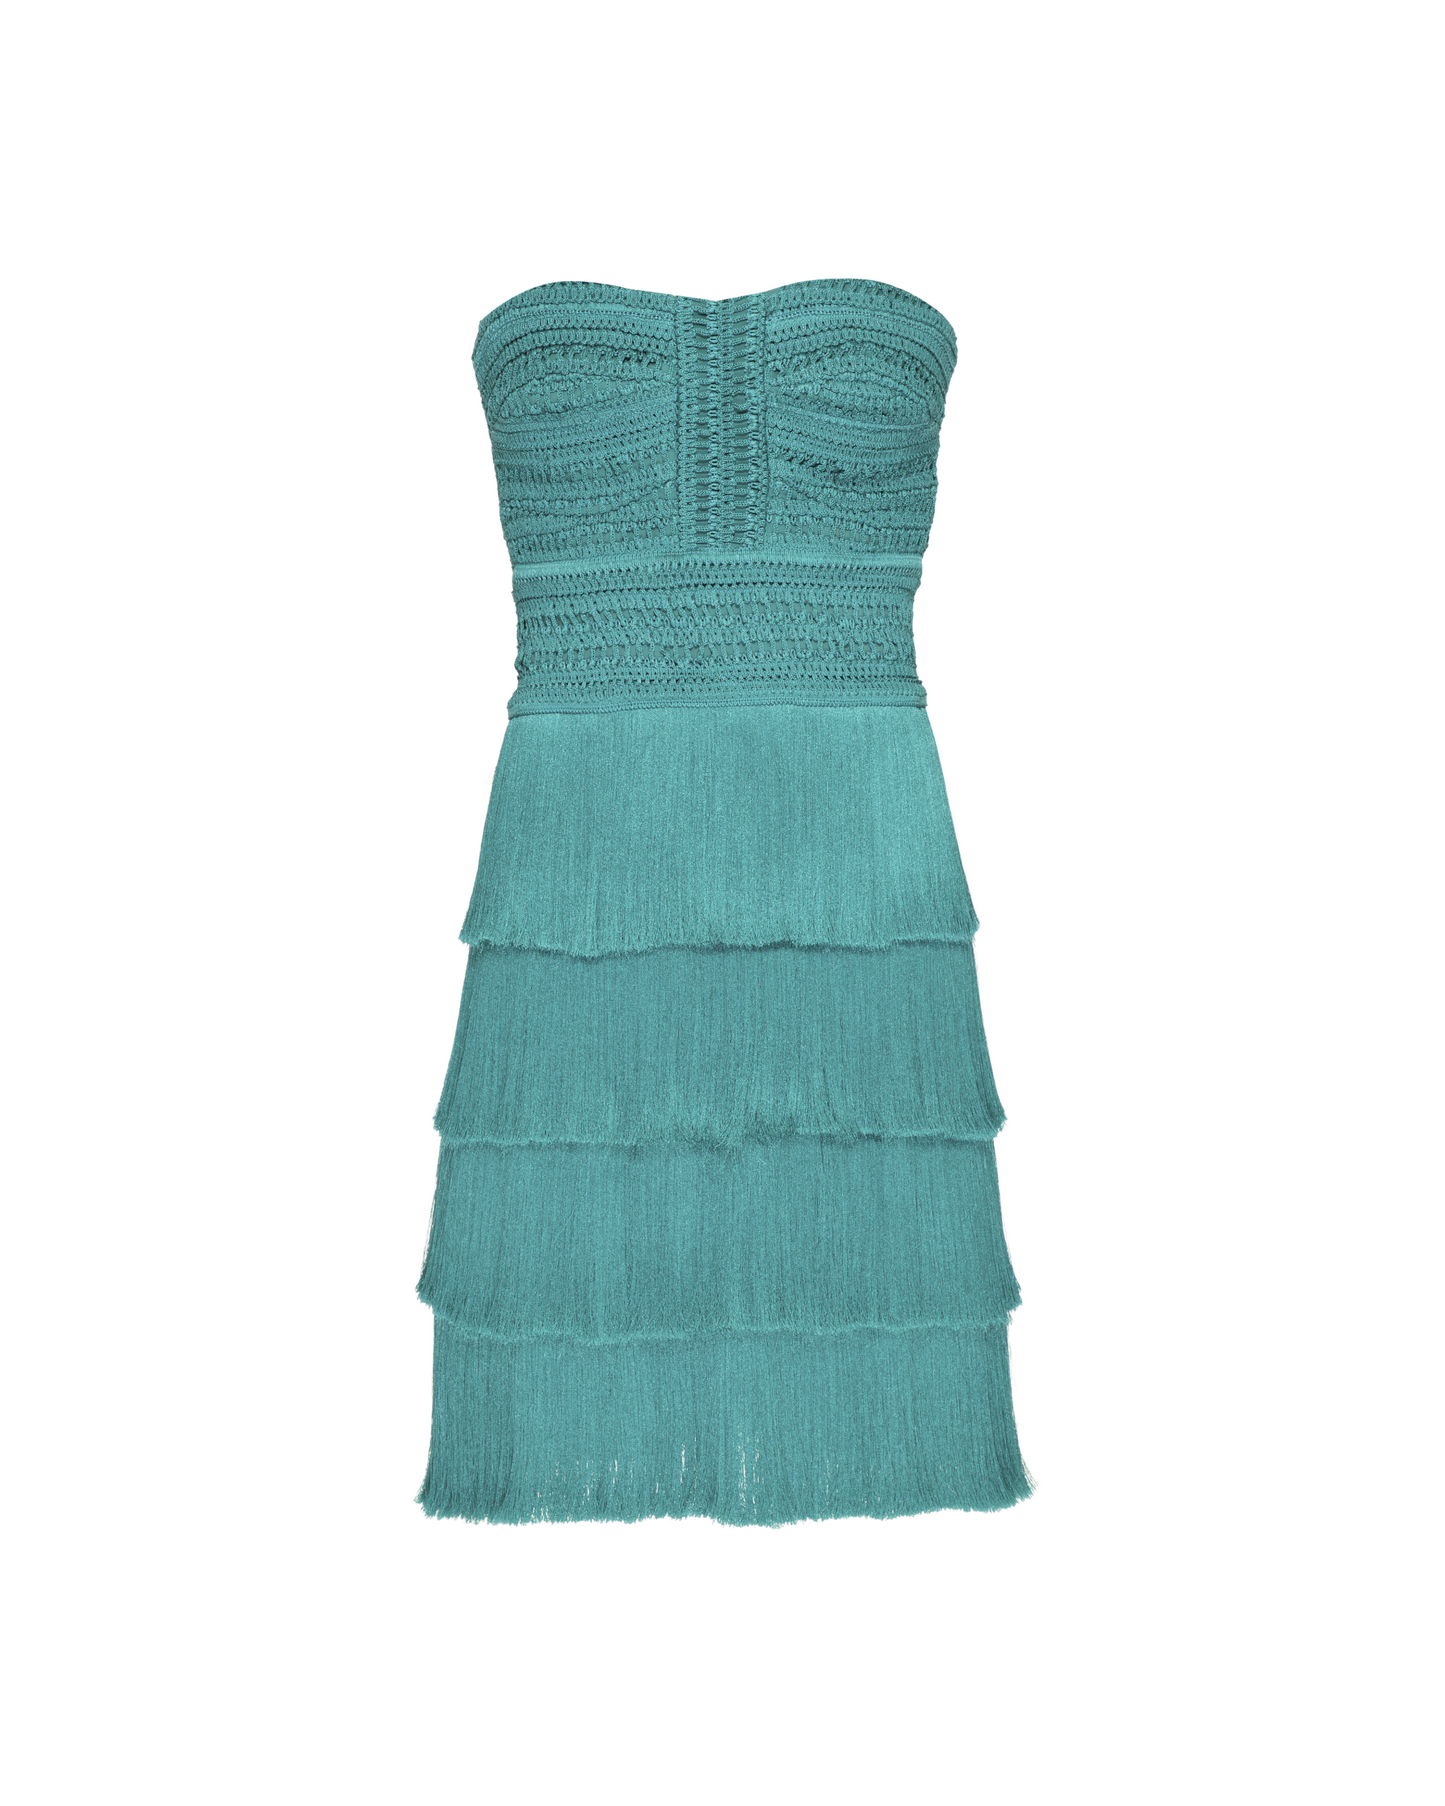 PatBo Fringe Mini Dress - Premium Short dress from Marina St Barth - Just $750! Shop now at Marina St Barth